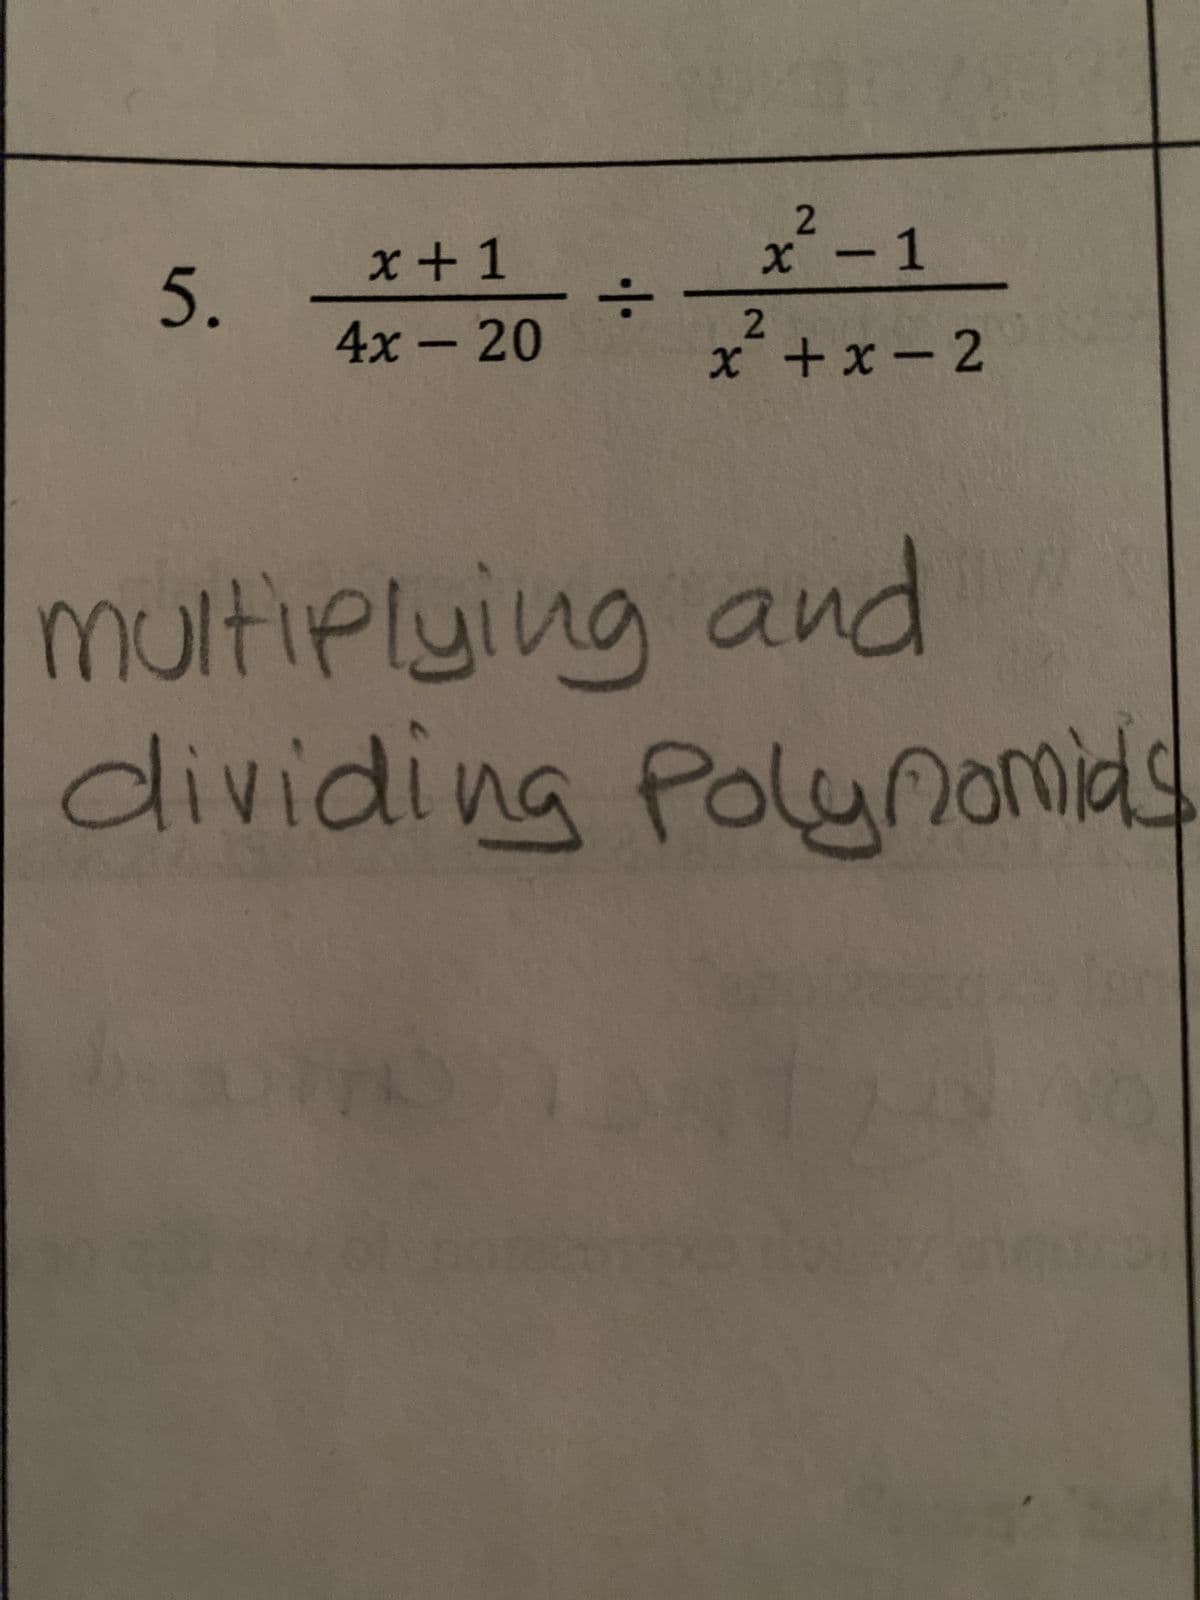 5.
x+1
4x - 20
÷
2
x² - 1
2
x²+x-2
multiplying and
dividing Polynomids